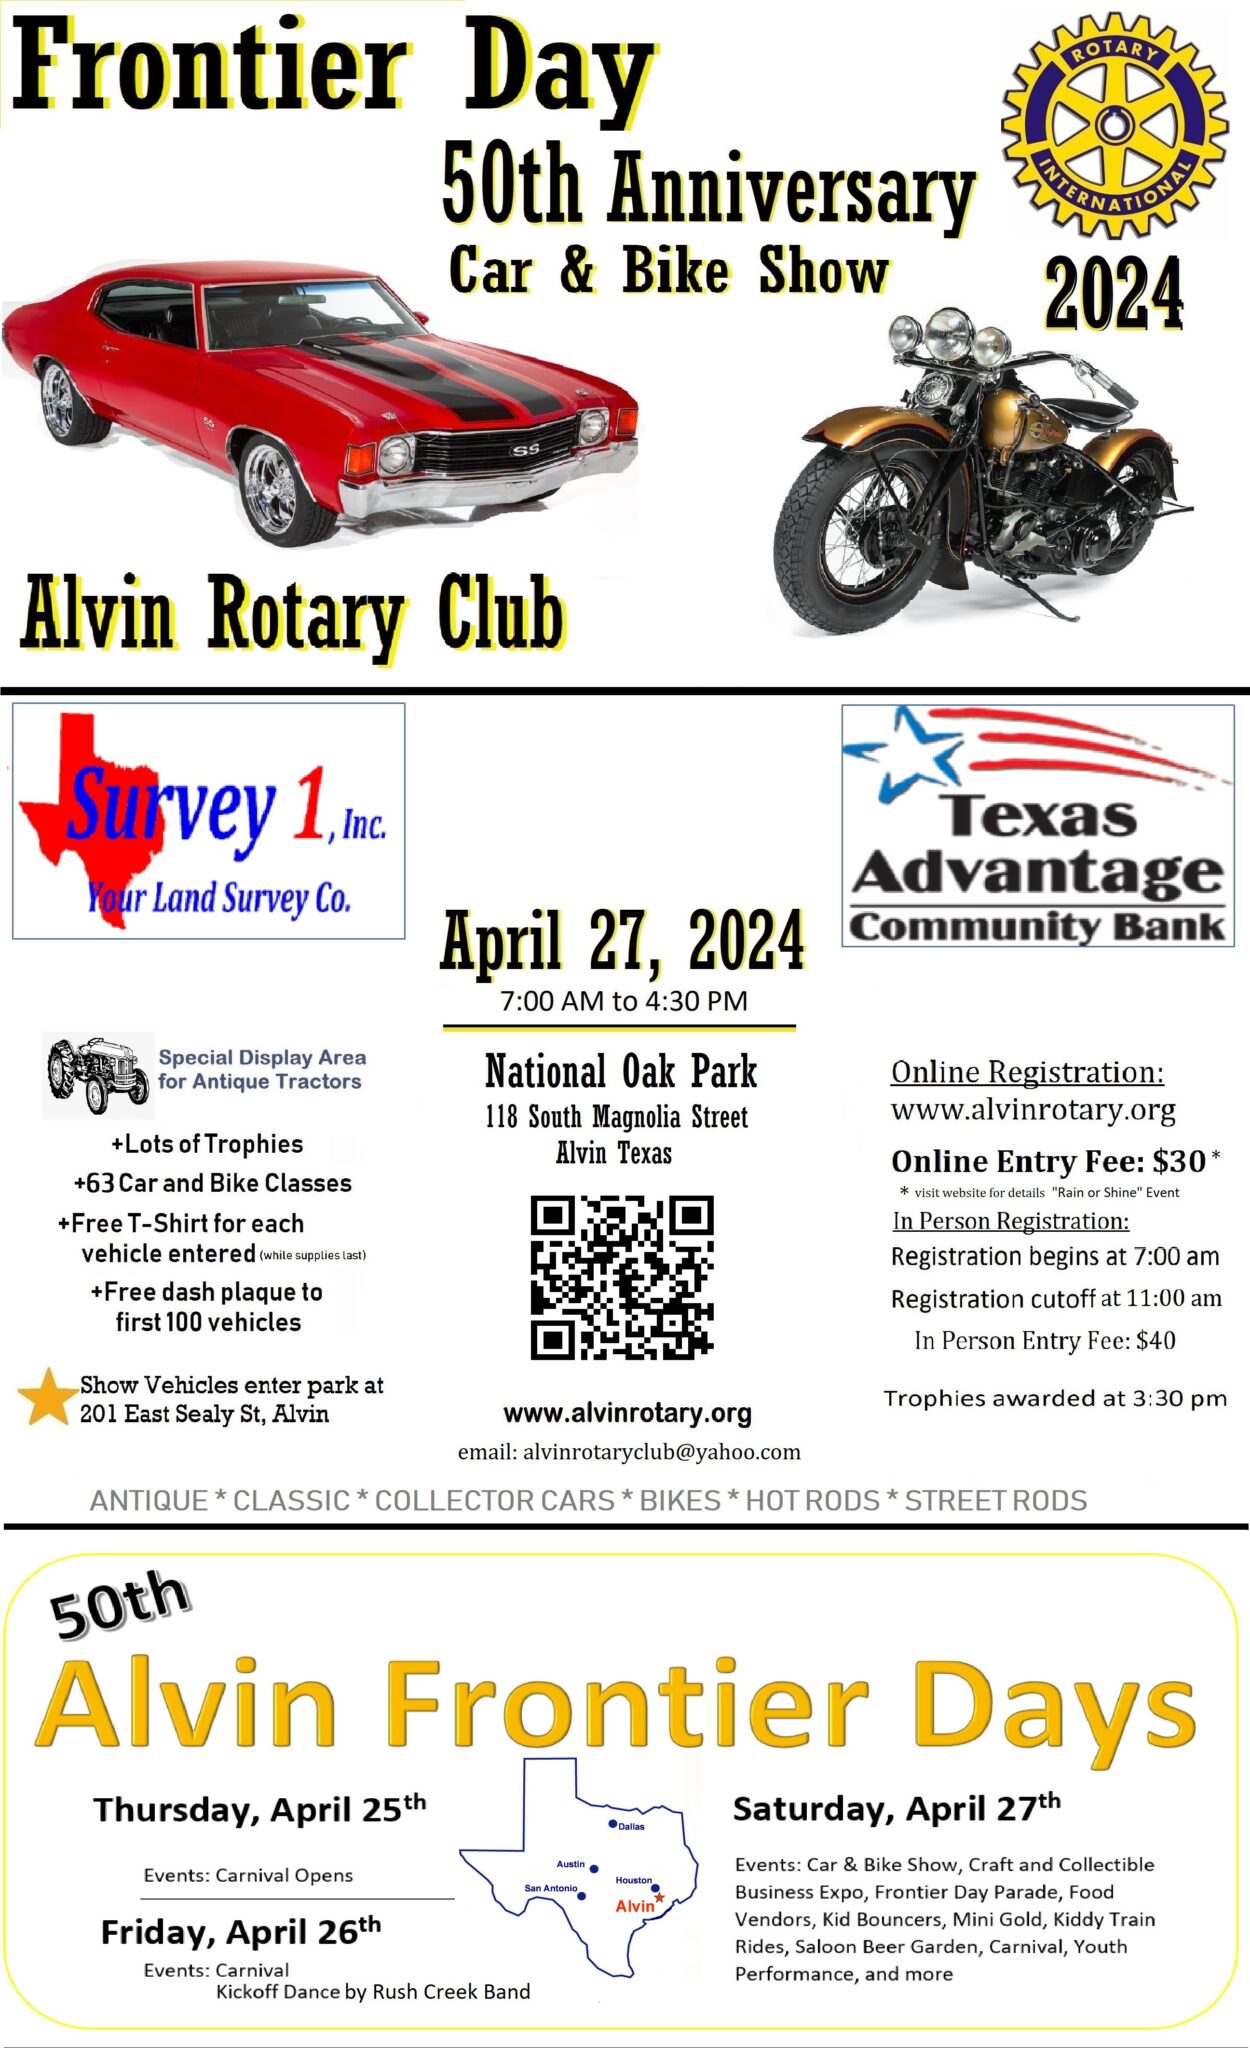 2024 Car and Bike Show Alvin Rotary Frontier Day Event Car Show Radar